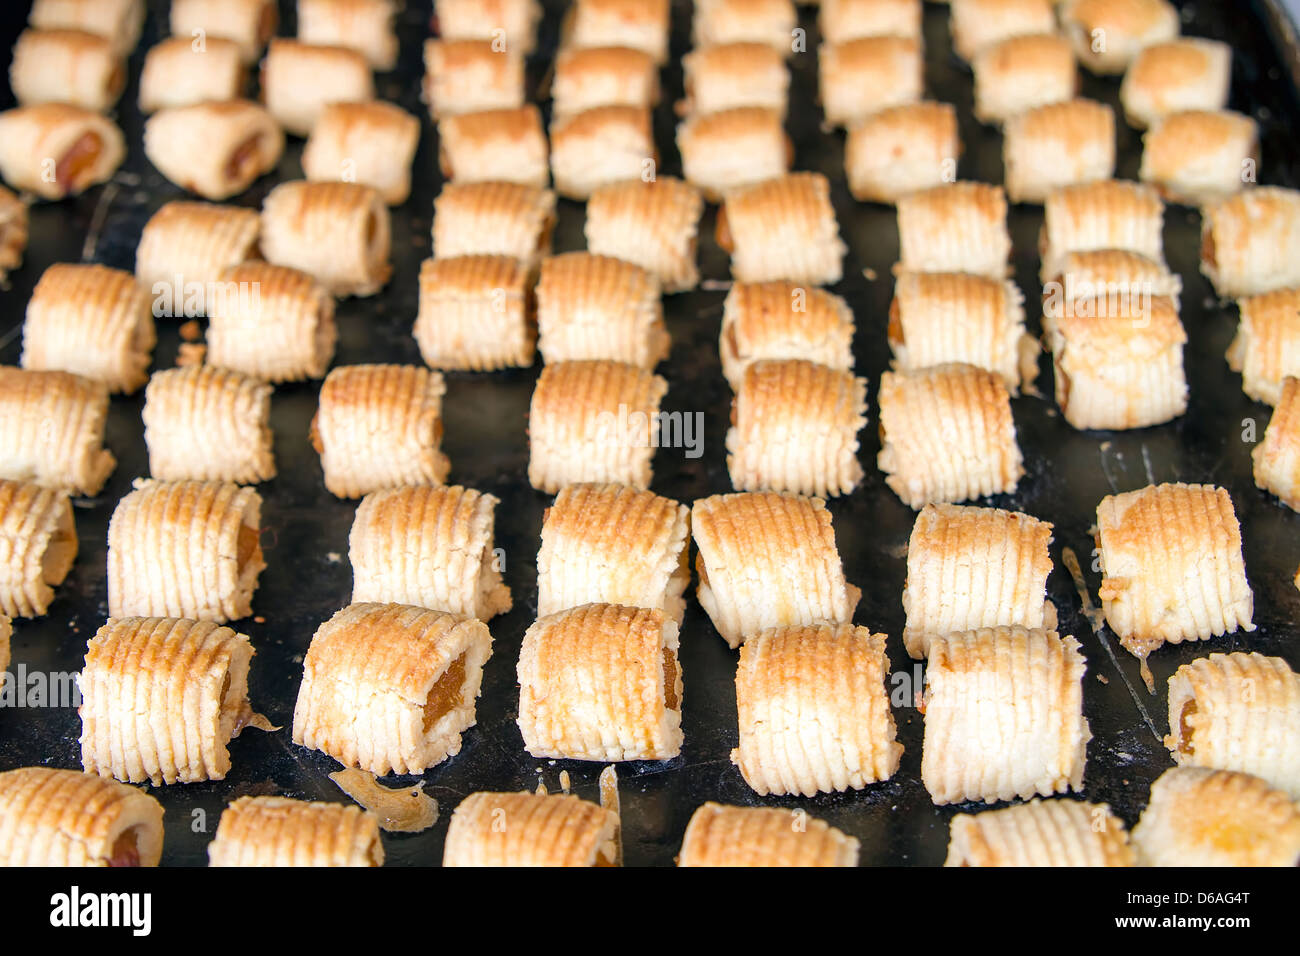 Tray of Pineapple Tarts Pastry Malaysian Dessert Snacks Closeup Stock Photo